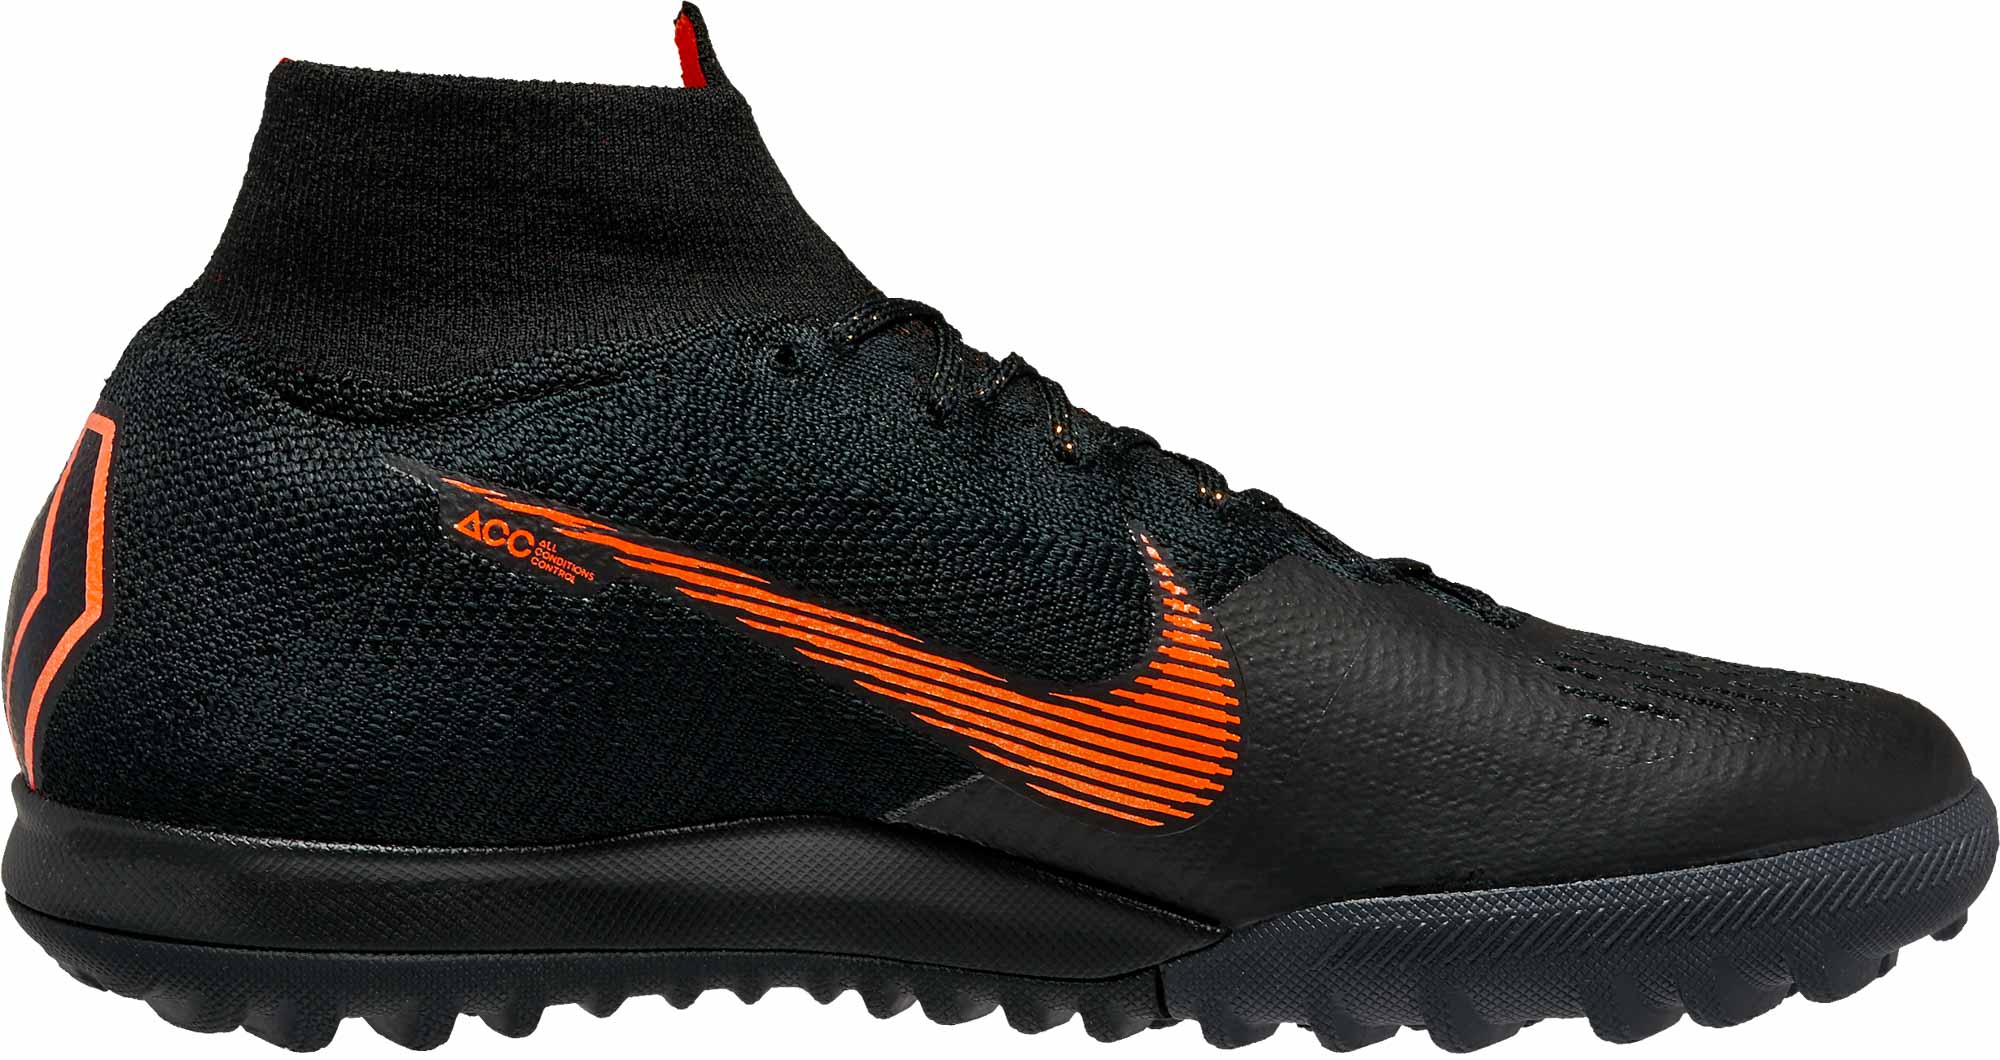 Nike SuperflyX 6 Elite TF - Black & Orange